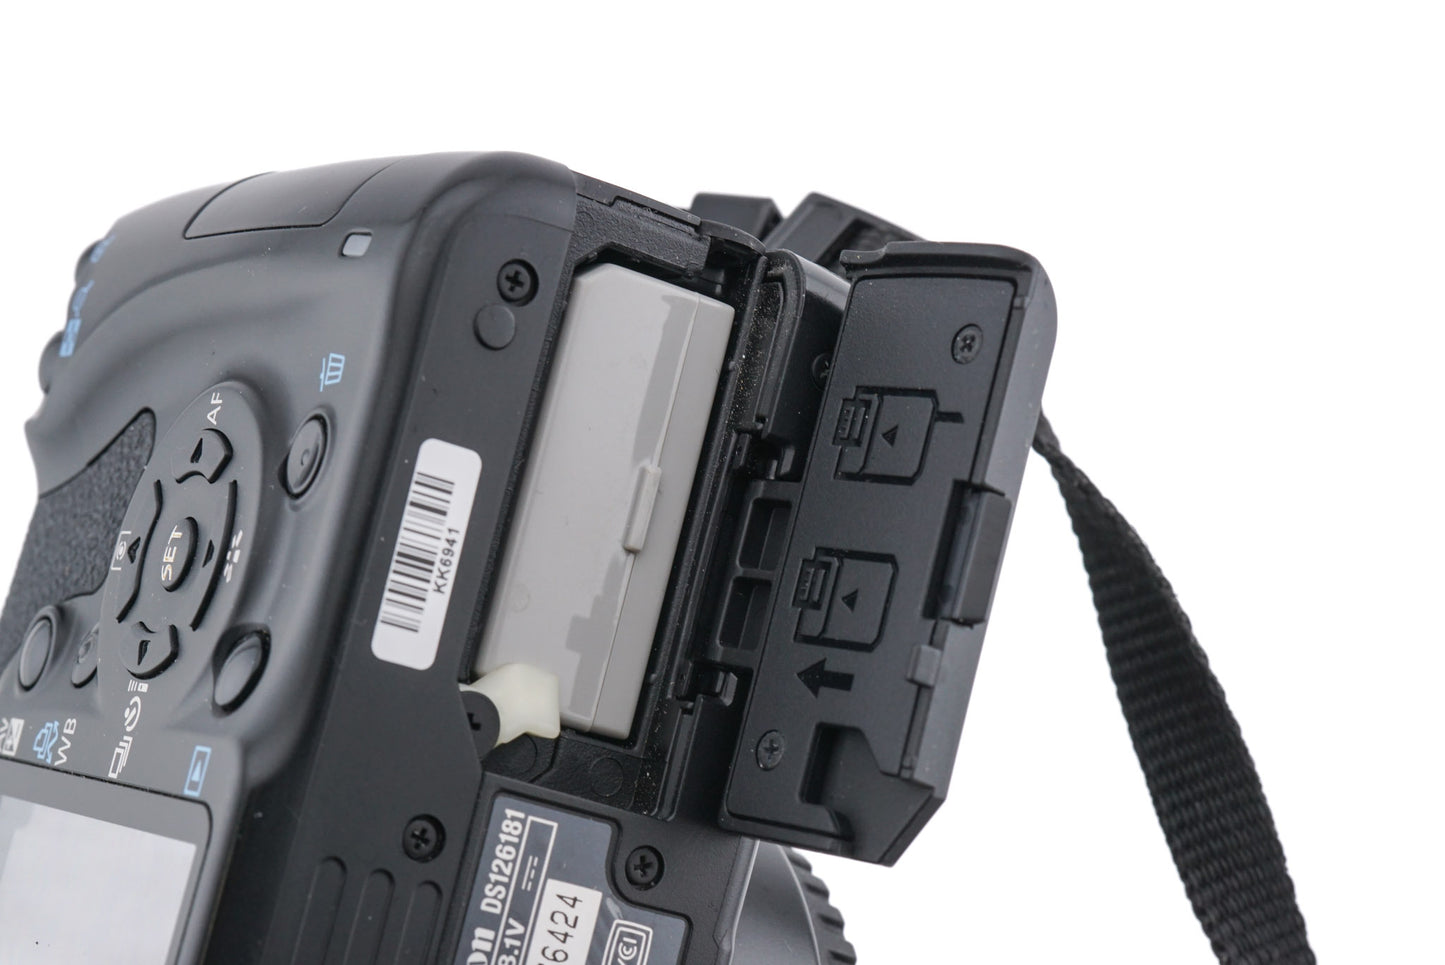 Canon EOS 450D + RC-6 Remote Shutter Release